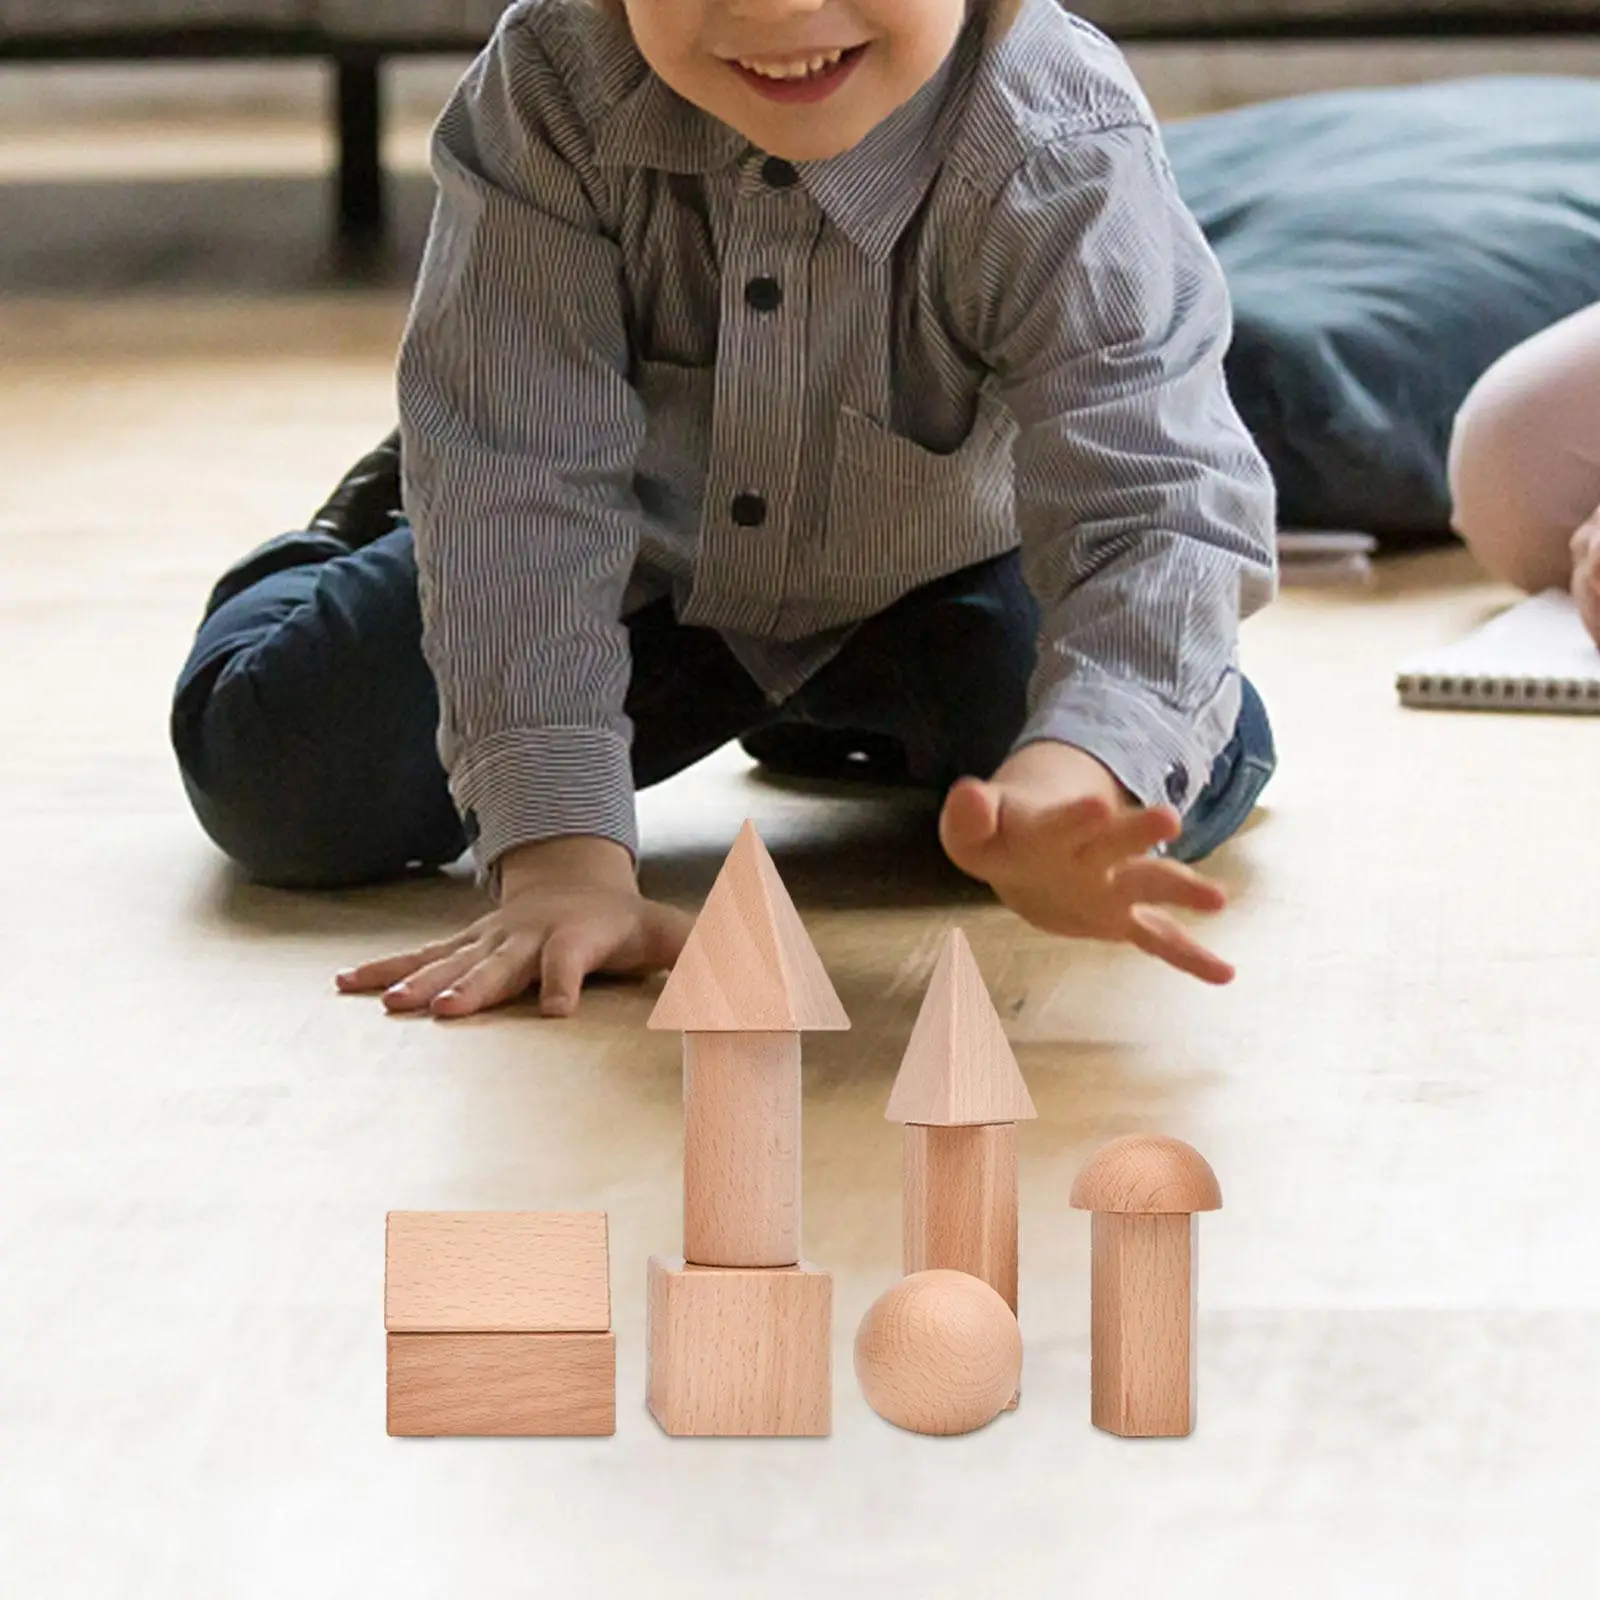 Wood Geometric Solid Blocks Montessori for Home Kindergarten Classroom